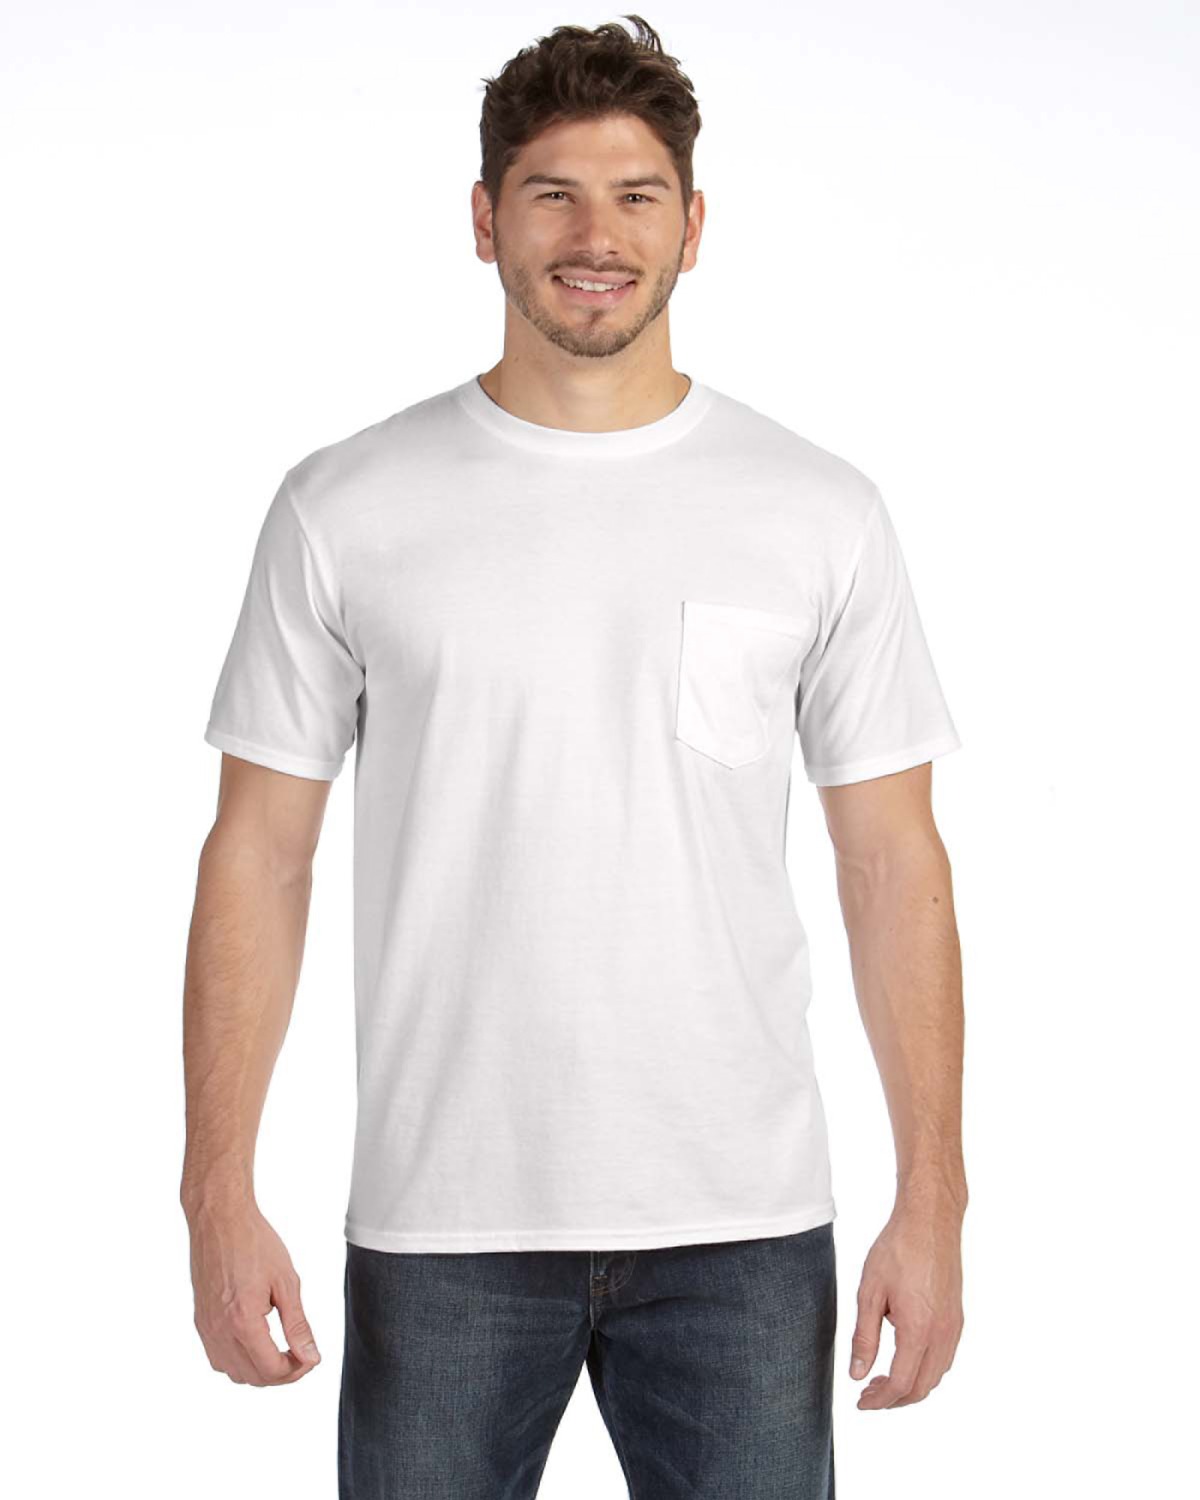 783AN Anvil Adult Midweight Pocket T-Shirt